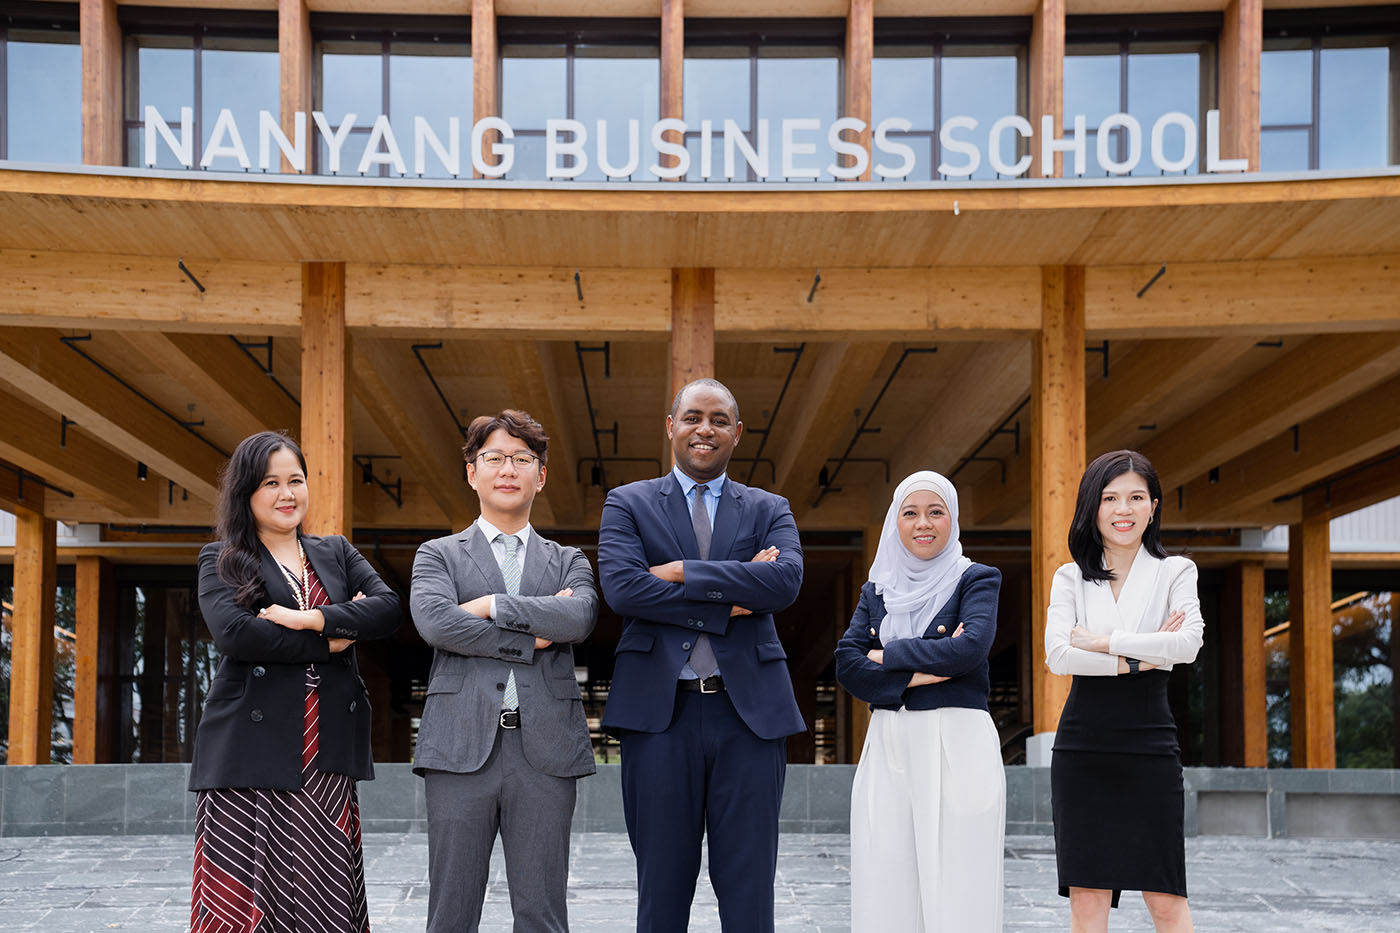 Nanyang Fellows MBA Programme Overview